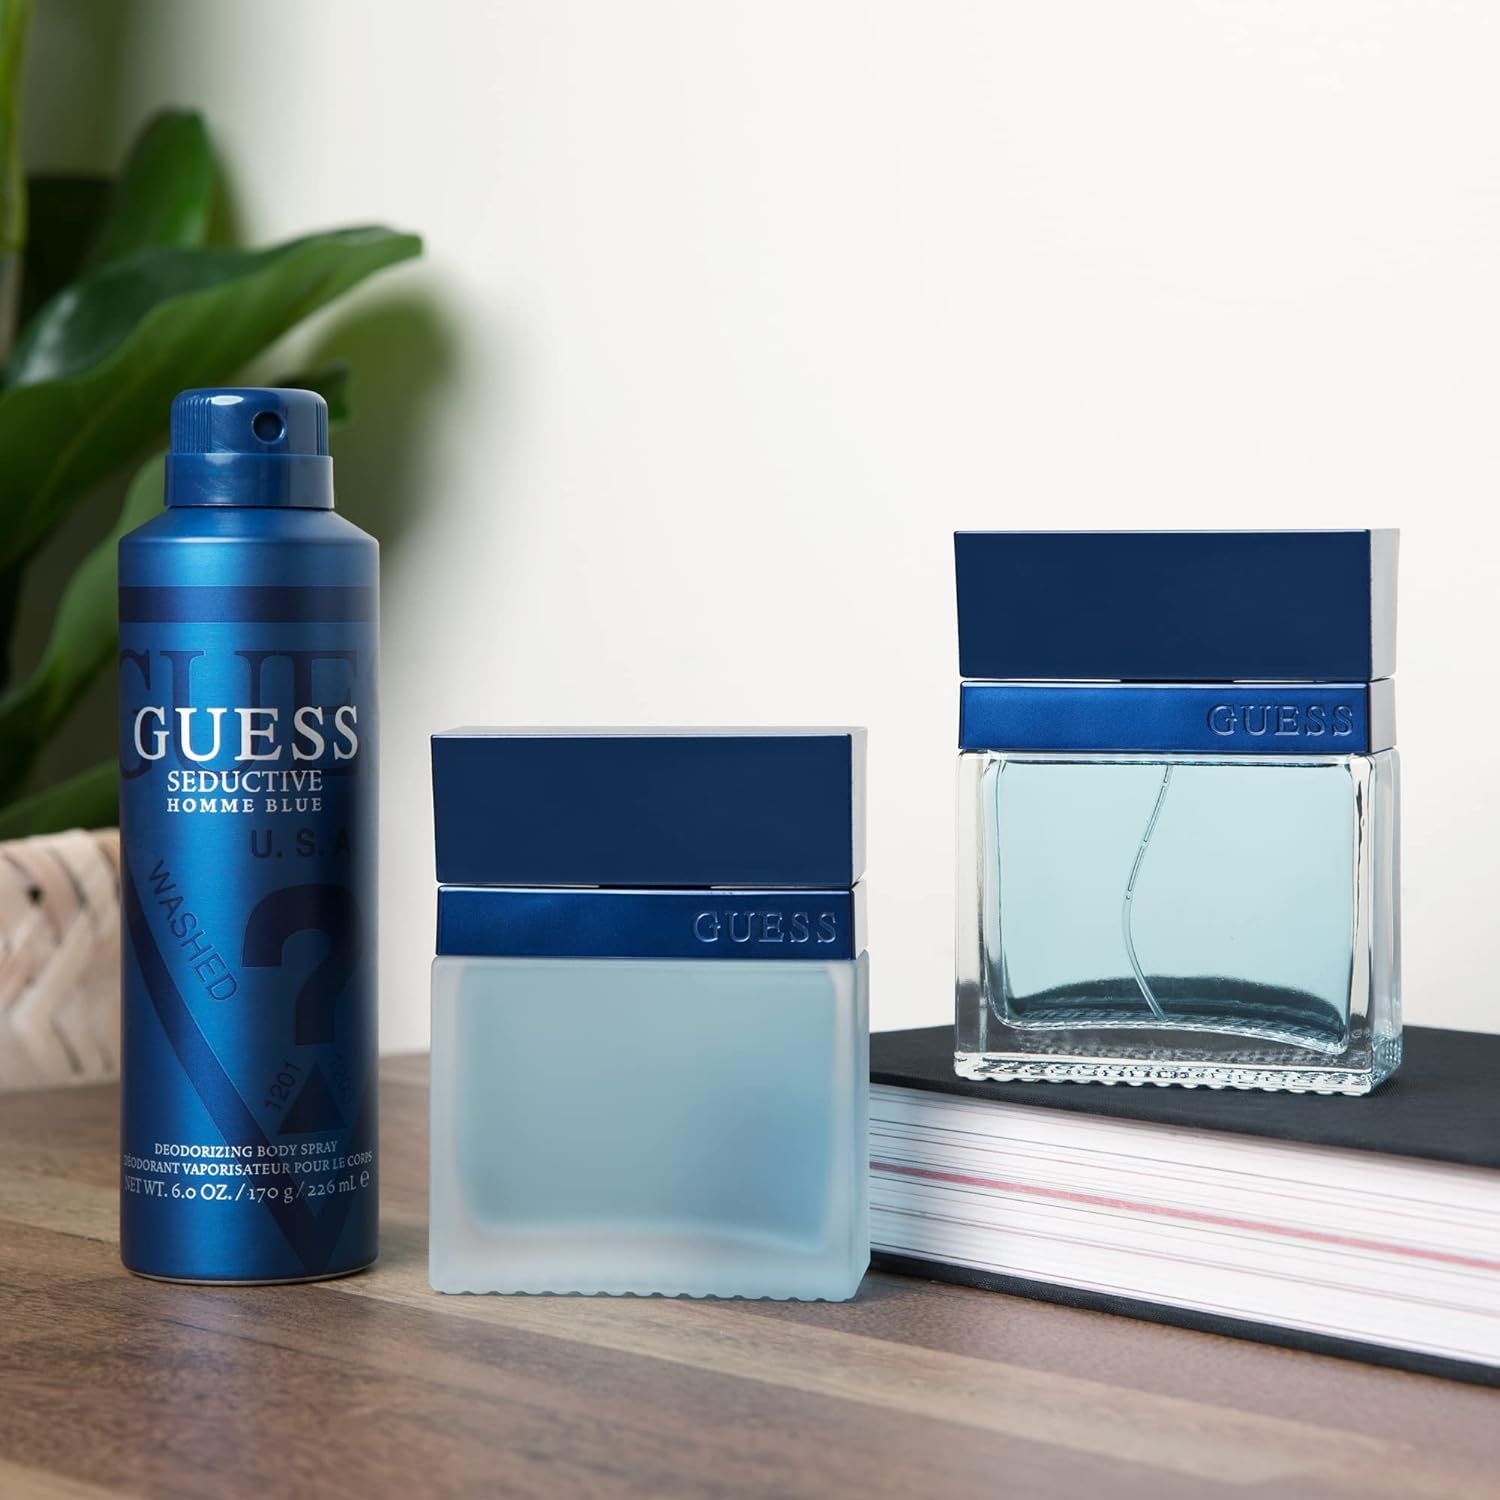 Guess Seductive Homme Blue Body Spray | My Perfume Shop Australia